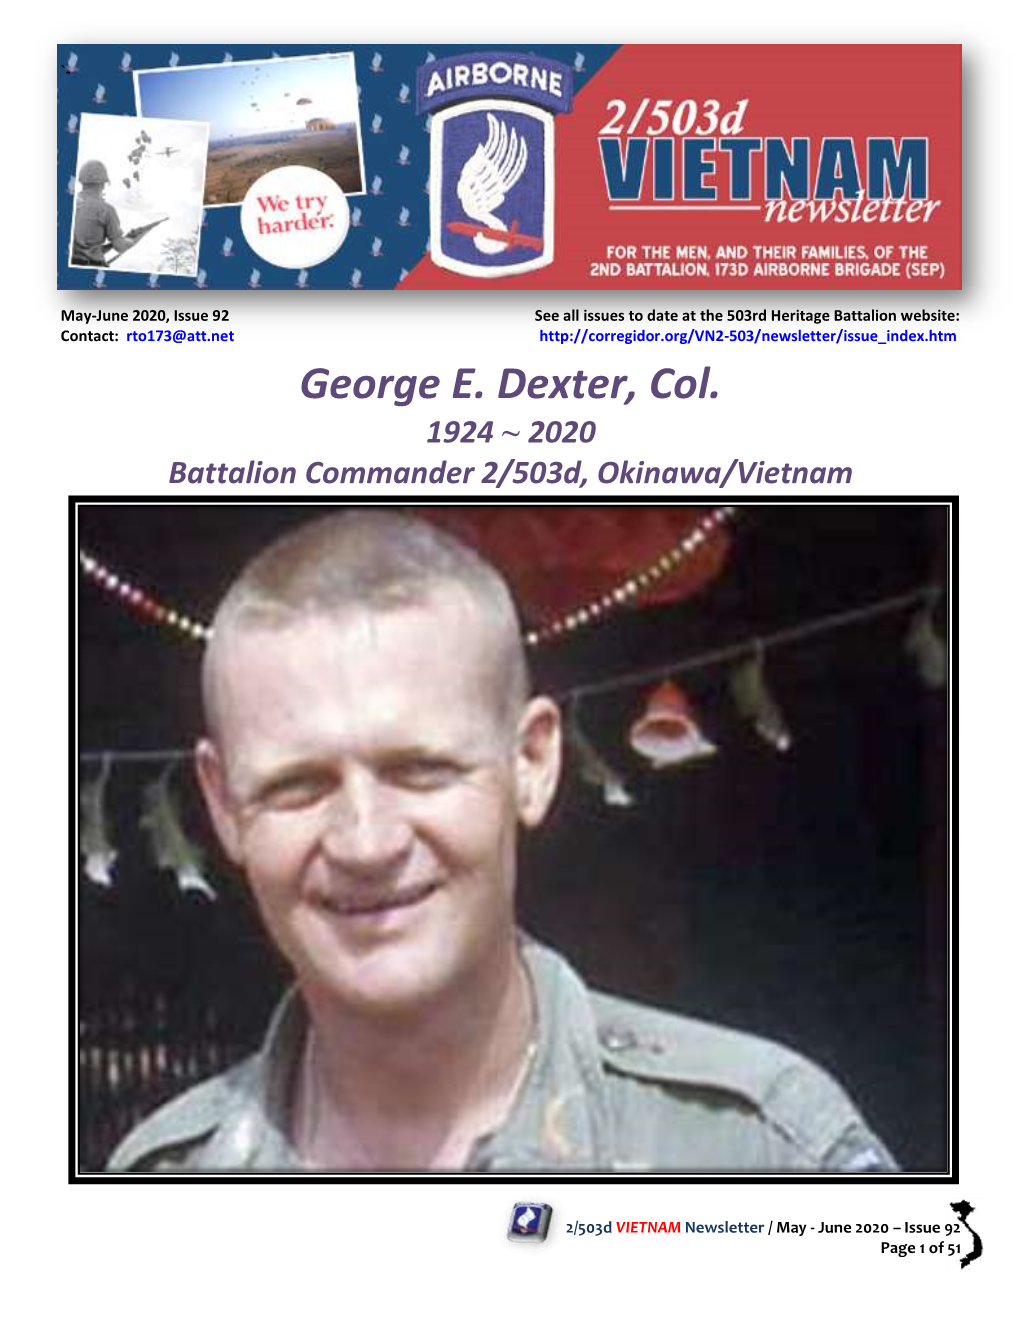 George E. Dexter, Col. 1924 ~ 2020 Battalion Commander 2/503D, Okinawa/Vietnam